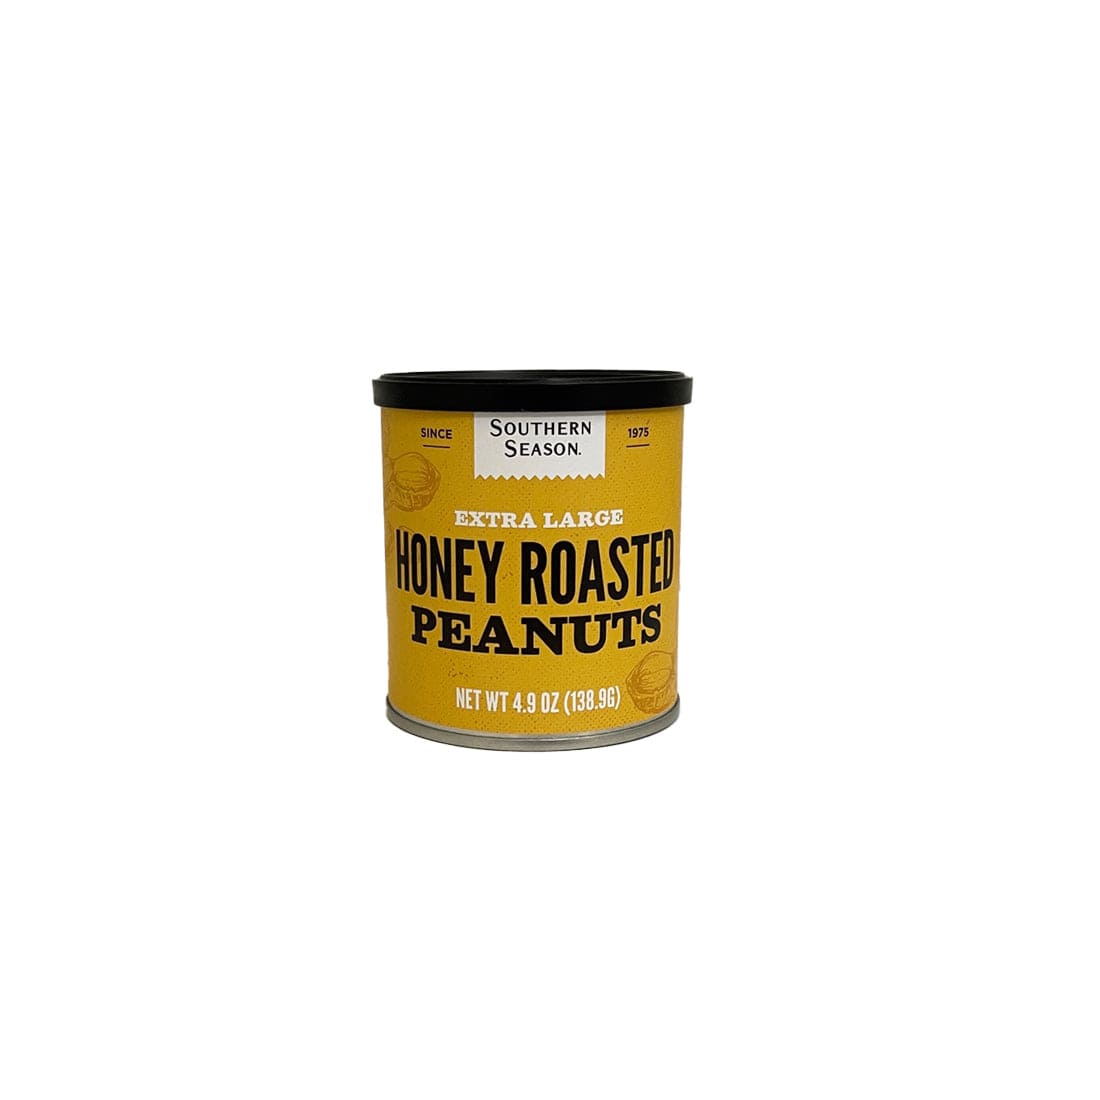 Southern Season Southern Season Honey Roasted Peanuts 4.9 oz